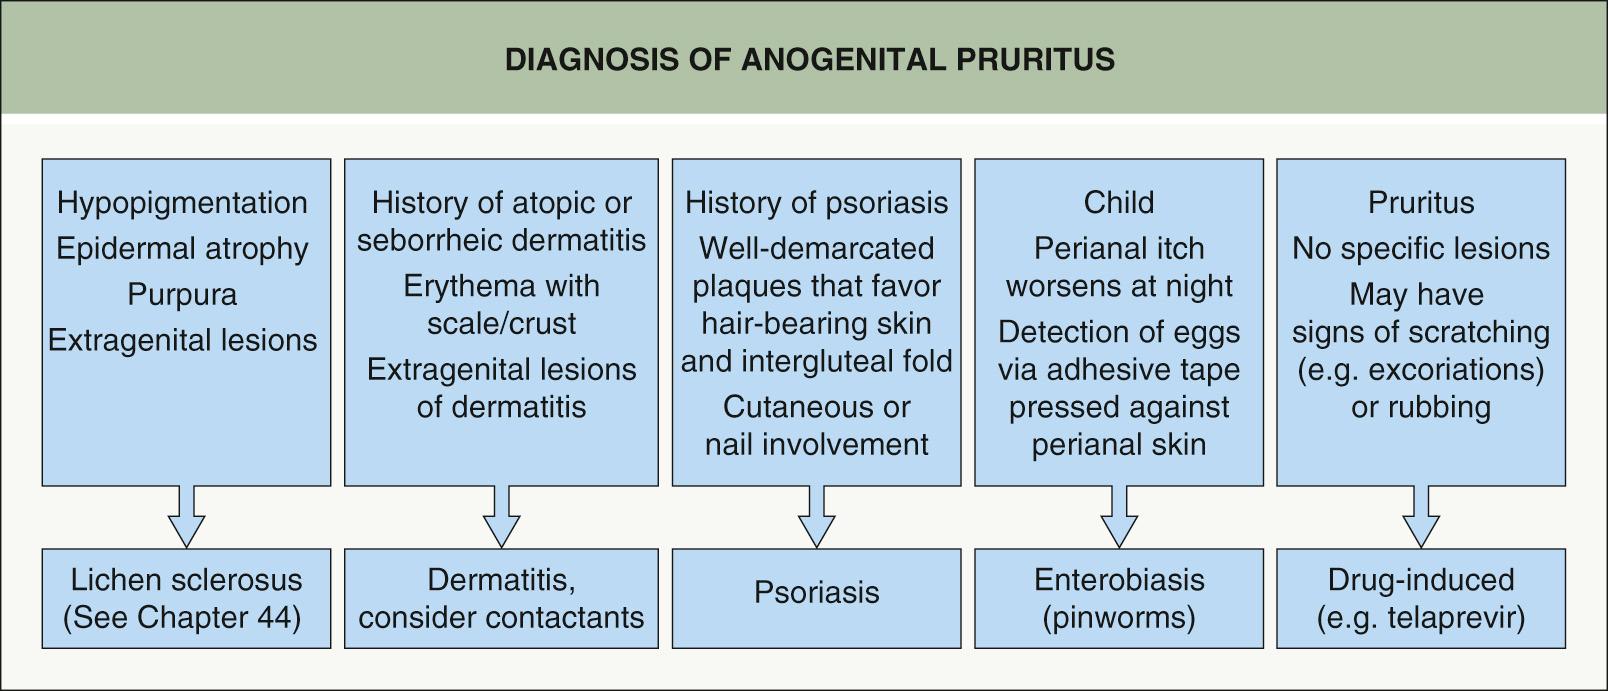 Fig. 73.10, Diagnosis of anogenital pruritus.